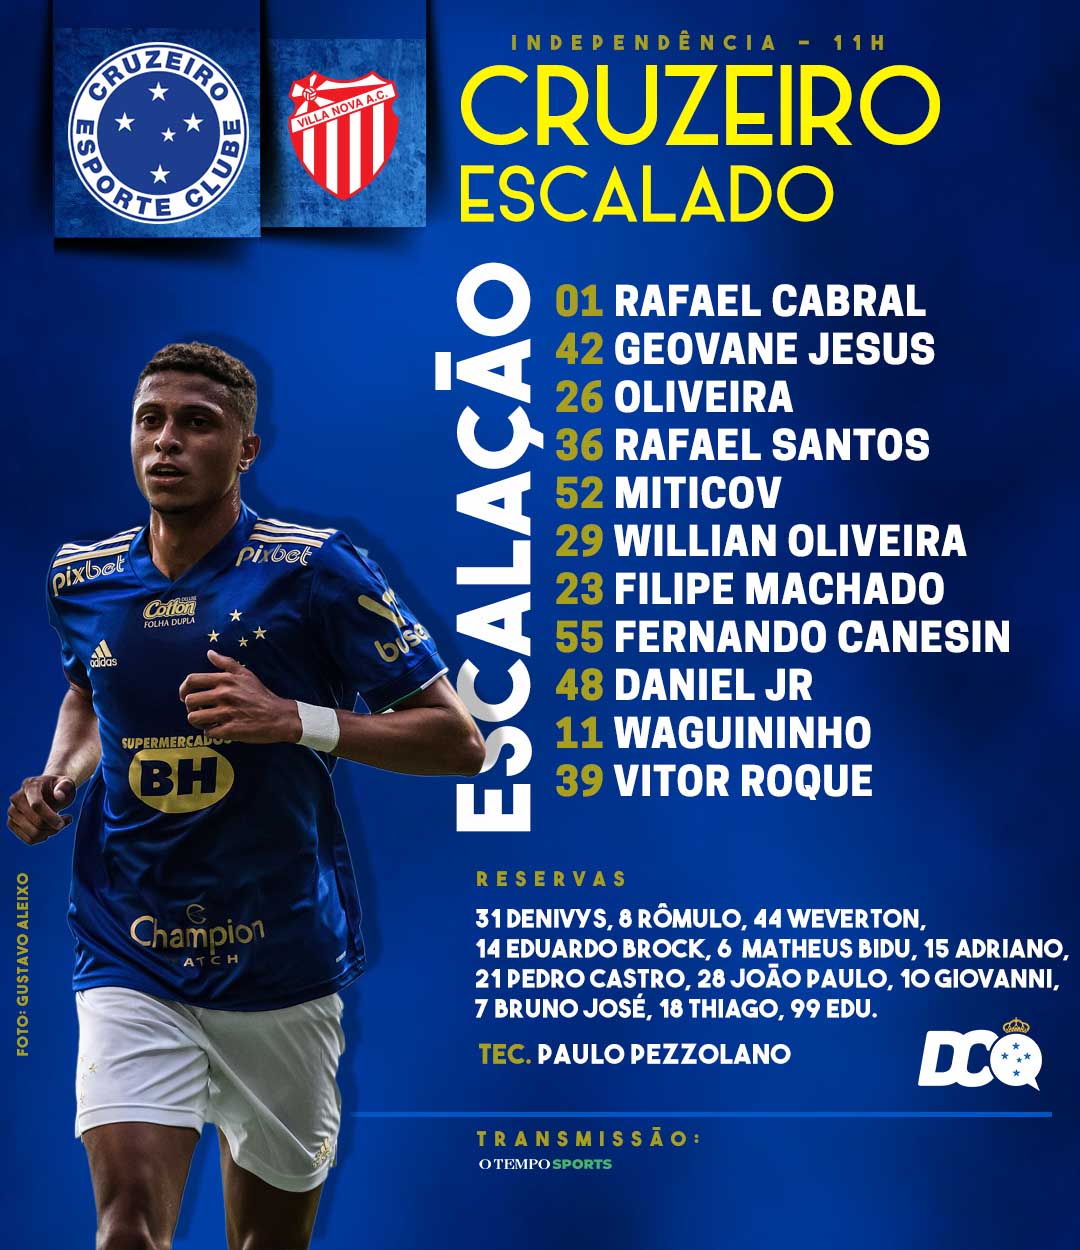 Cruzeiro Villa Nova